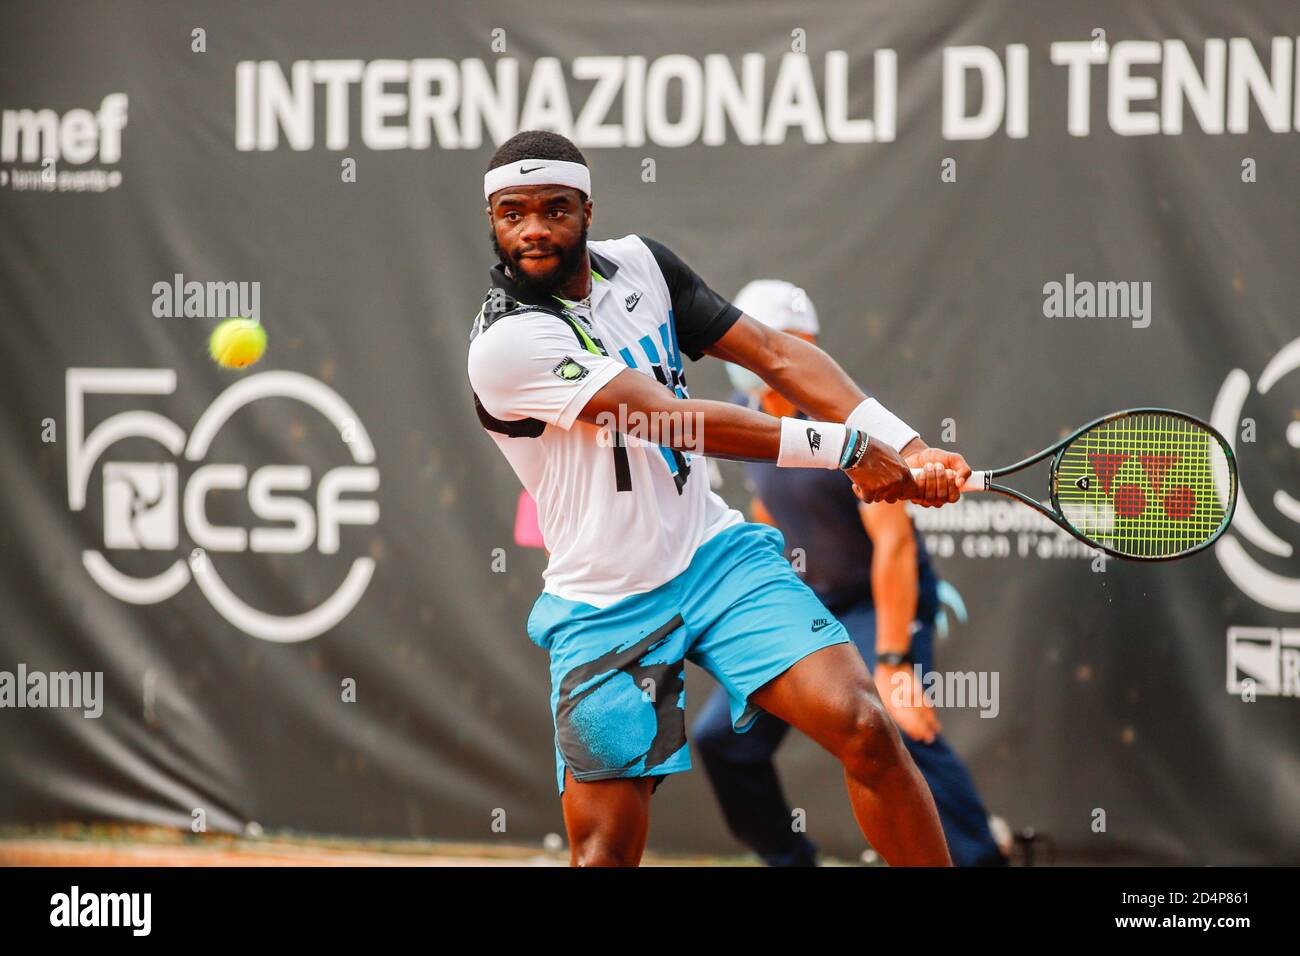 rances Tiafoe durante l'ATP Challenger 125 - internazionali Emilia Romagna, Tennis Internationals, parma, Italy, 09 Oct 2020 Credit: LM/Roberta Corradin Foto Stock